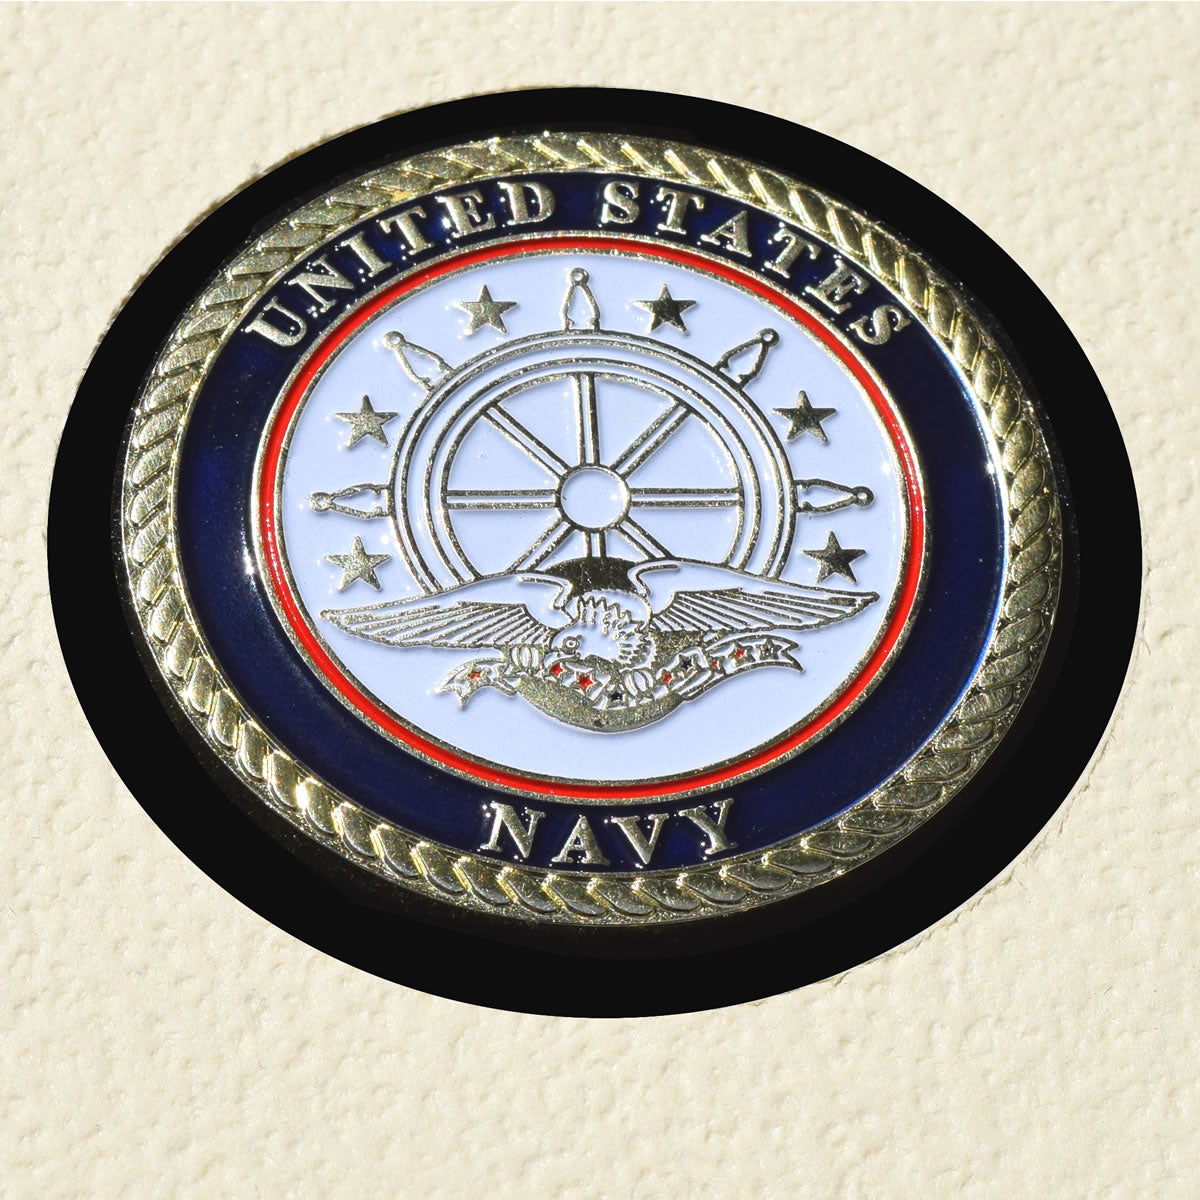 USS SEALIFT-ARABIAN-SEA T-AO-169 Detailed Coin